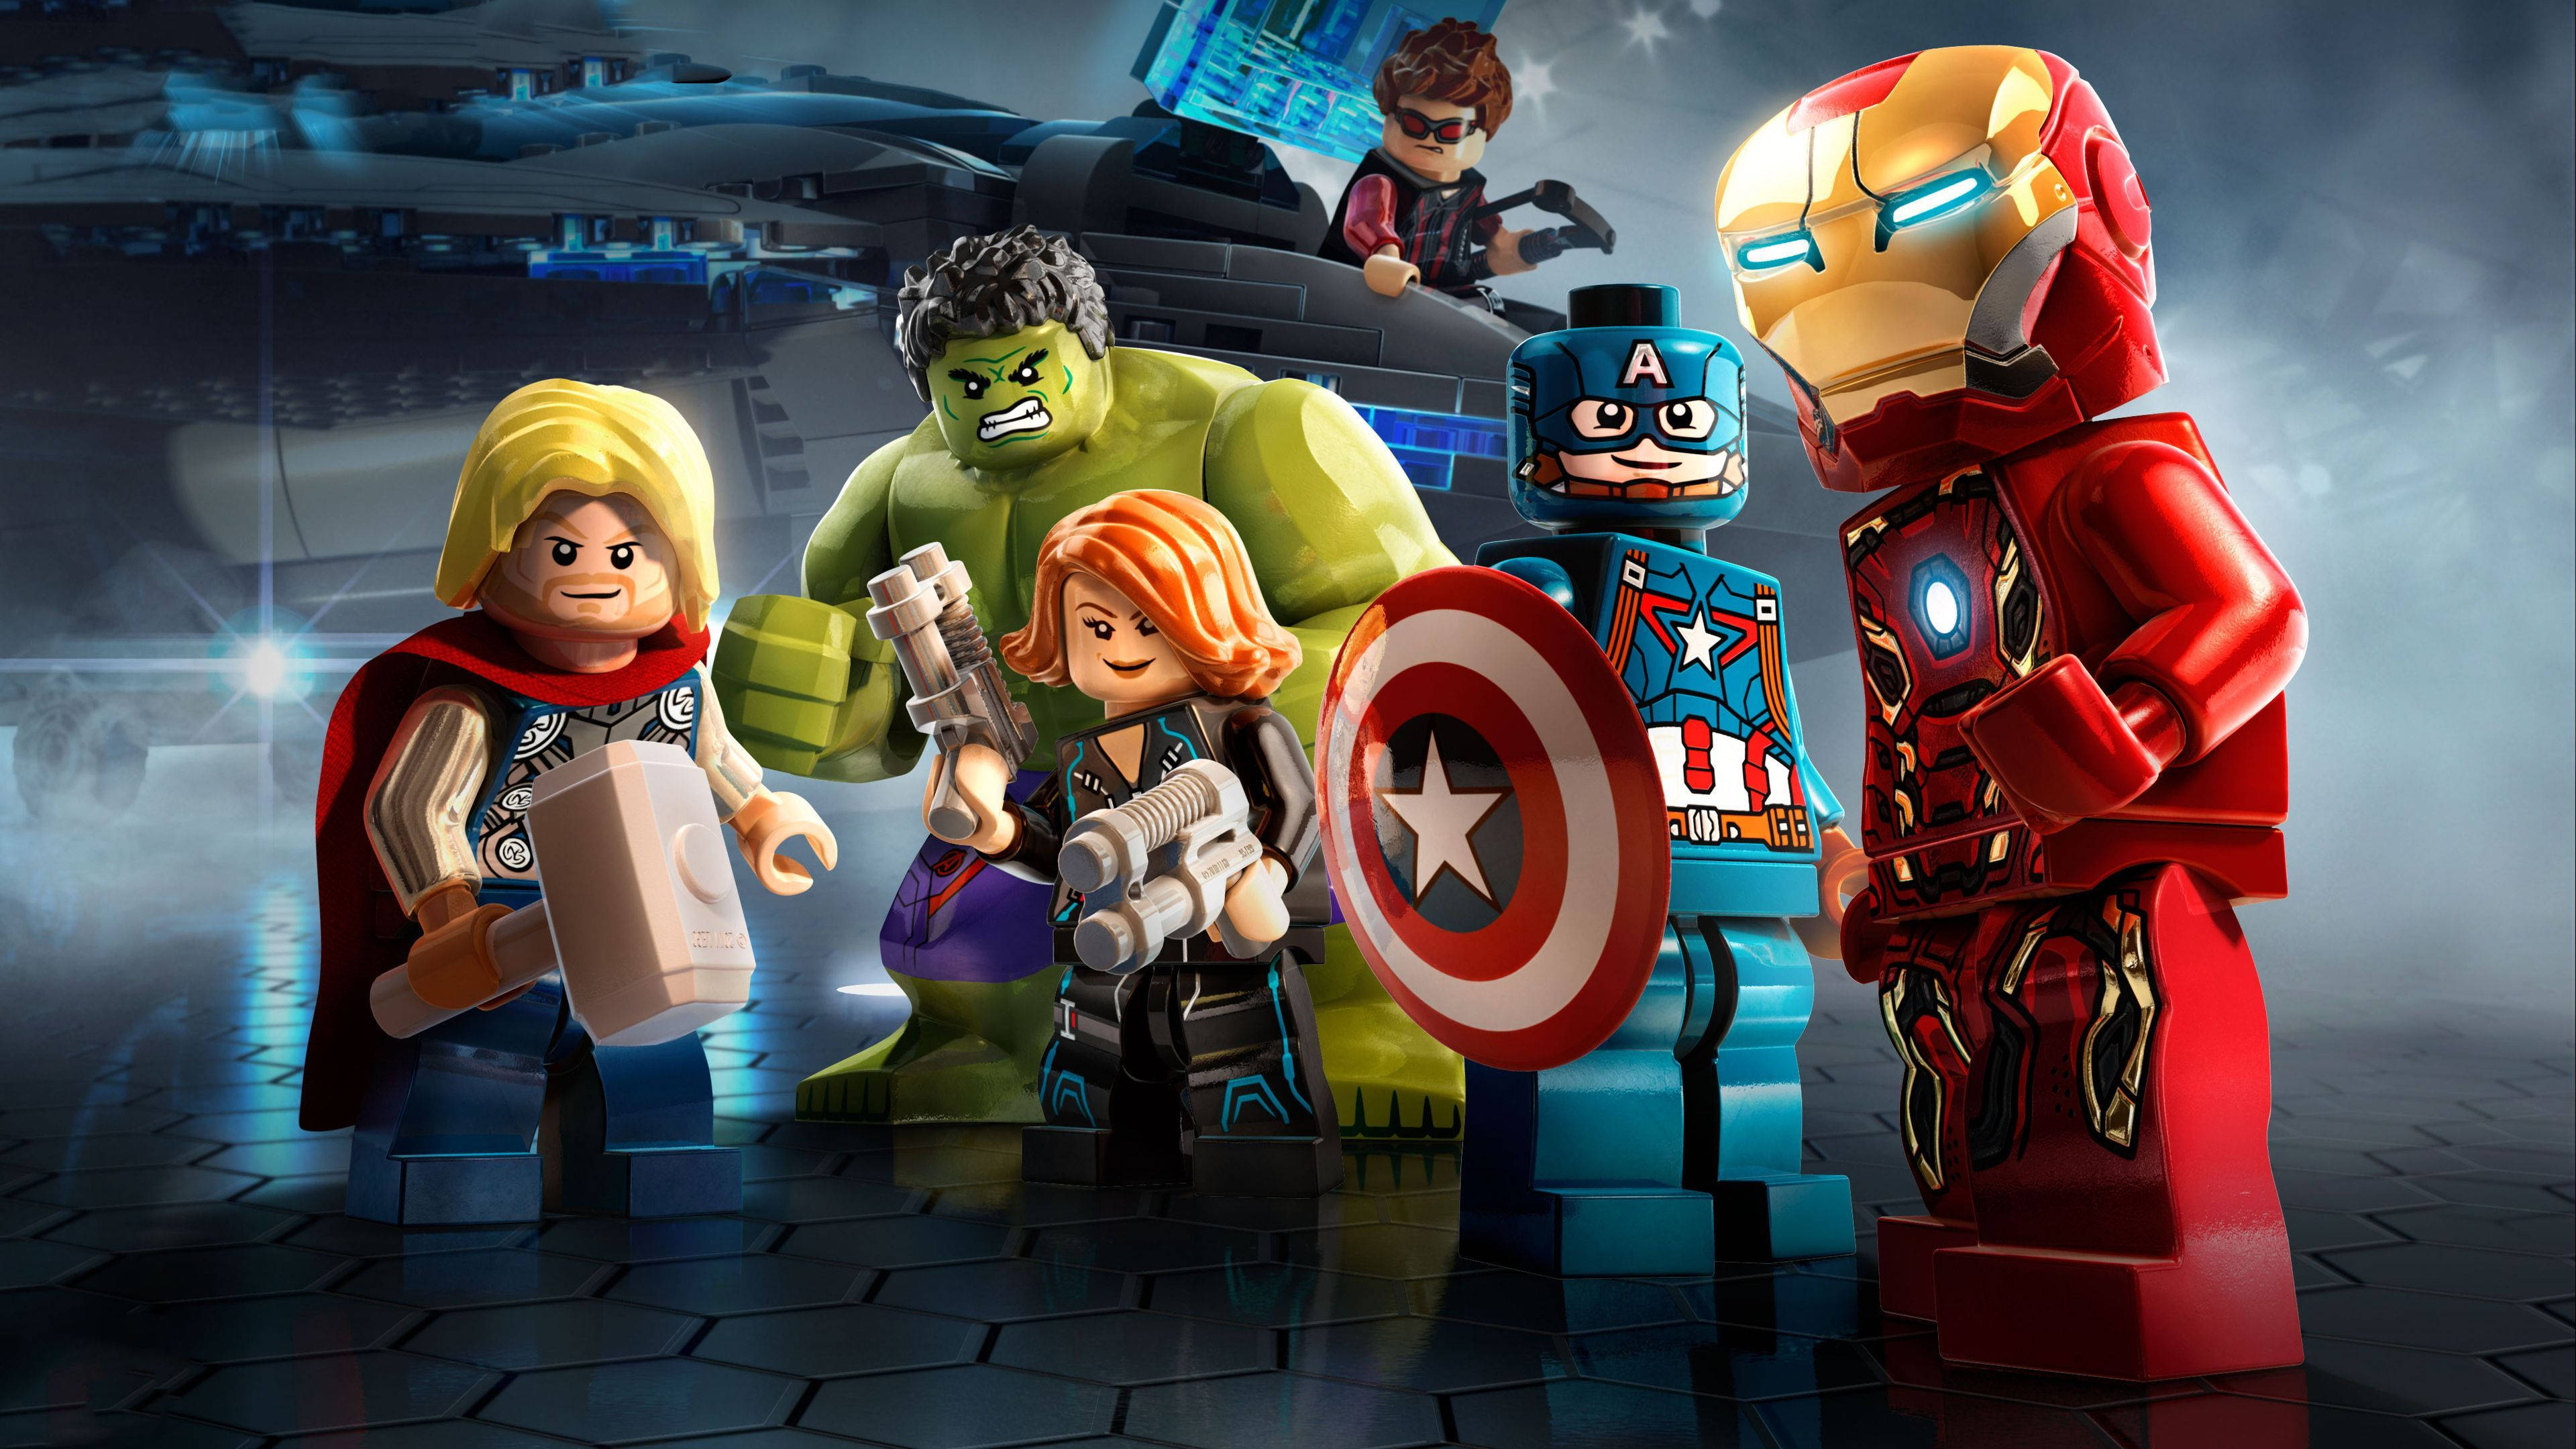 Download 4k Lego The Avengers Wallpaper 